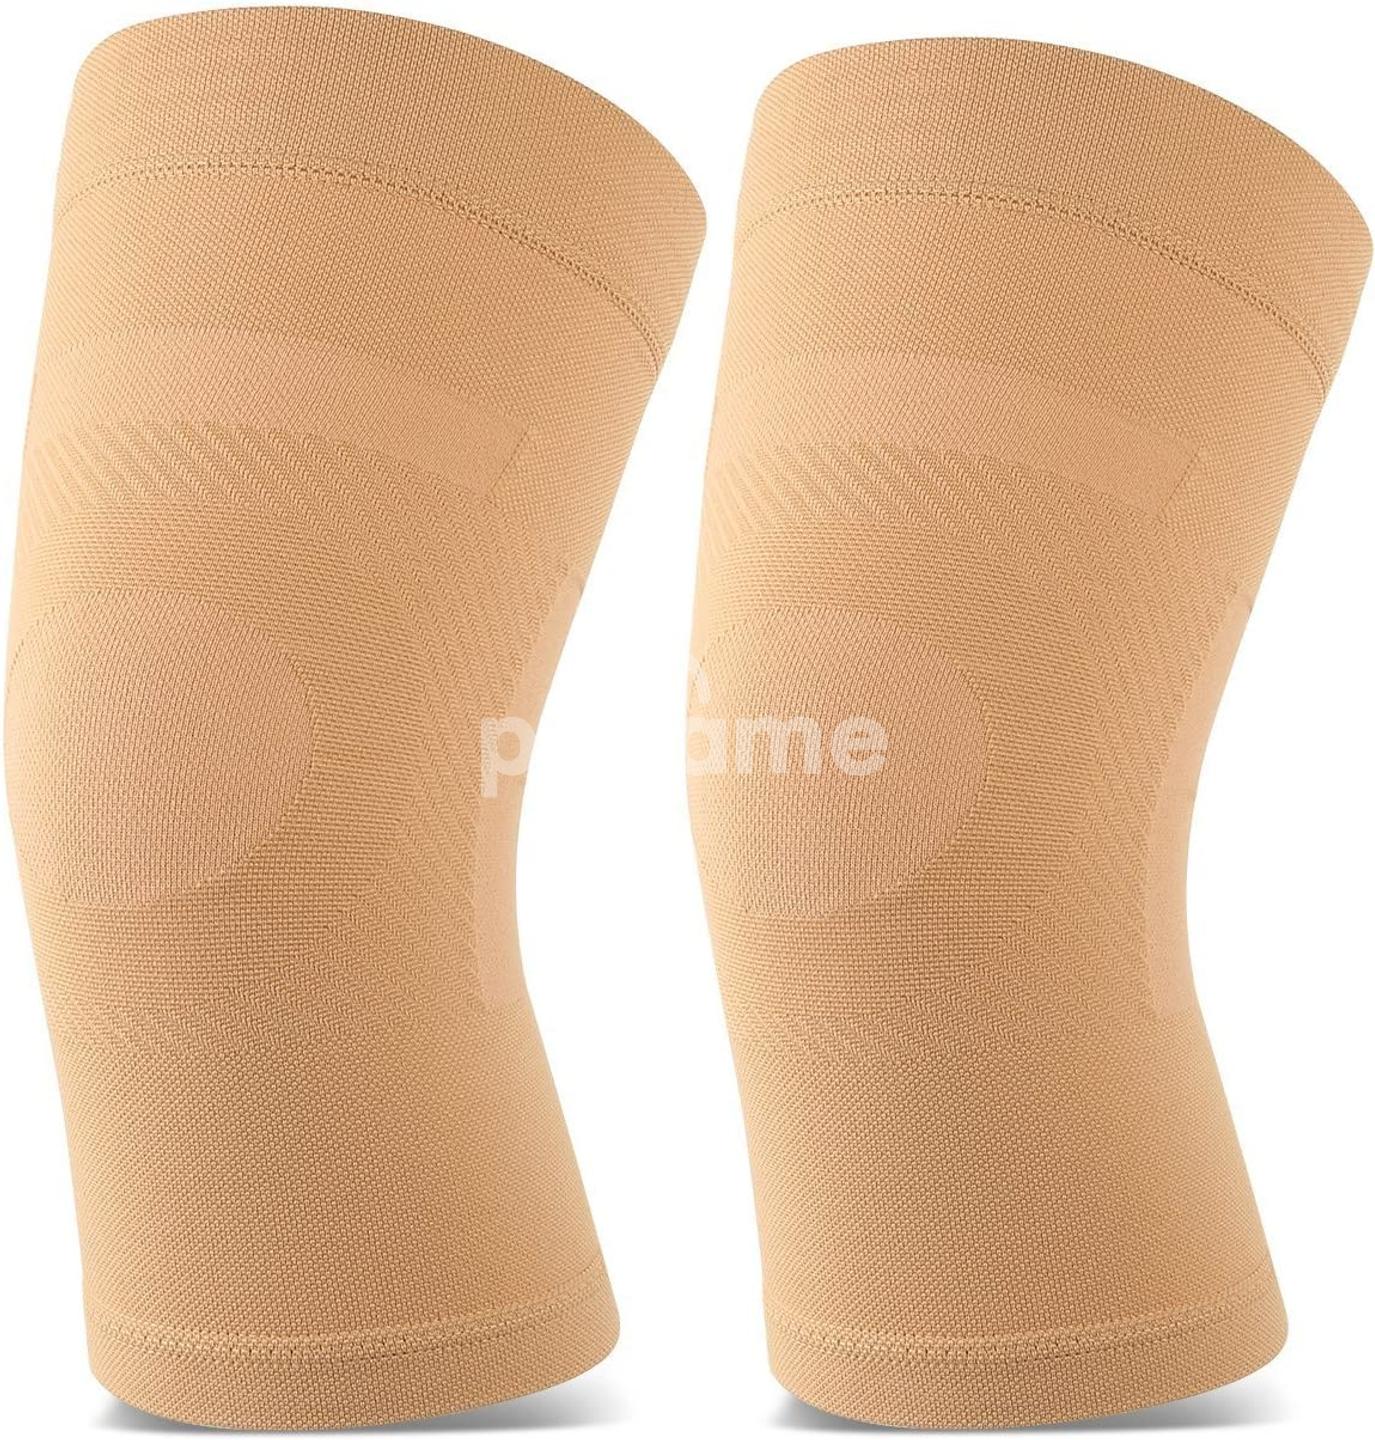 Buy Elestic Knee Socks Knee Pain Relief Sale Price Kenya in Nairobi CBD